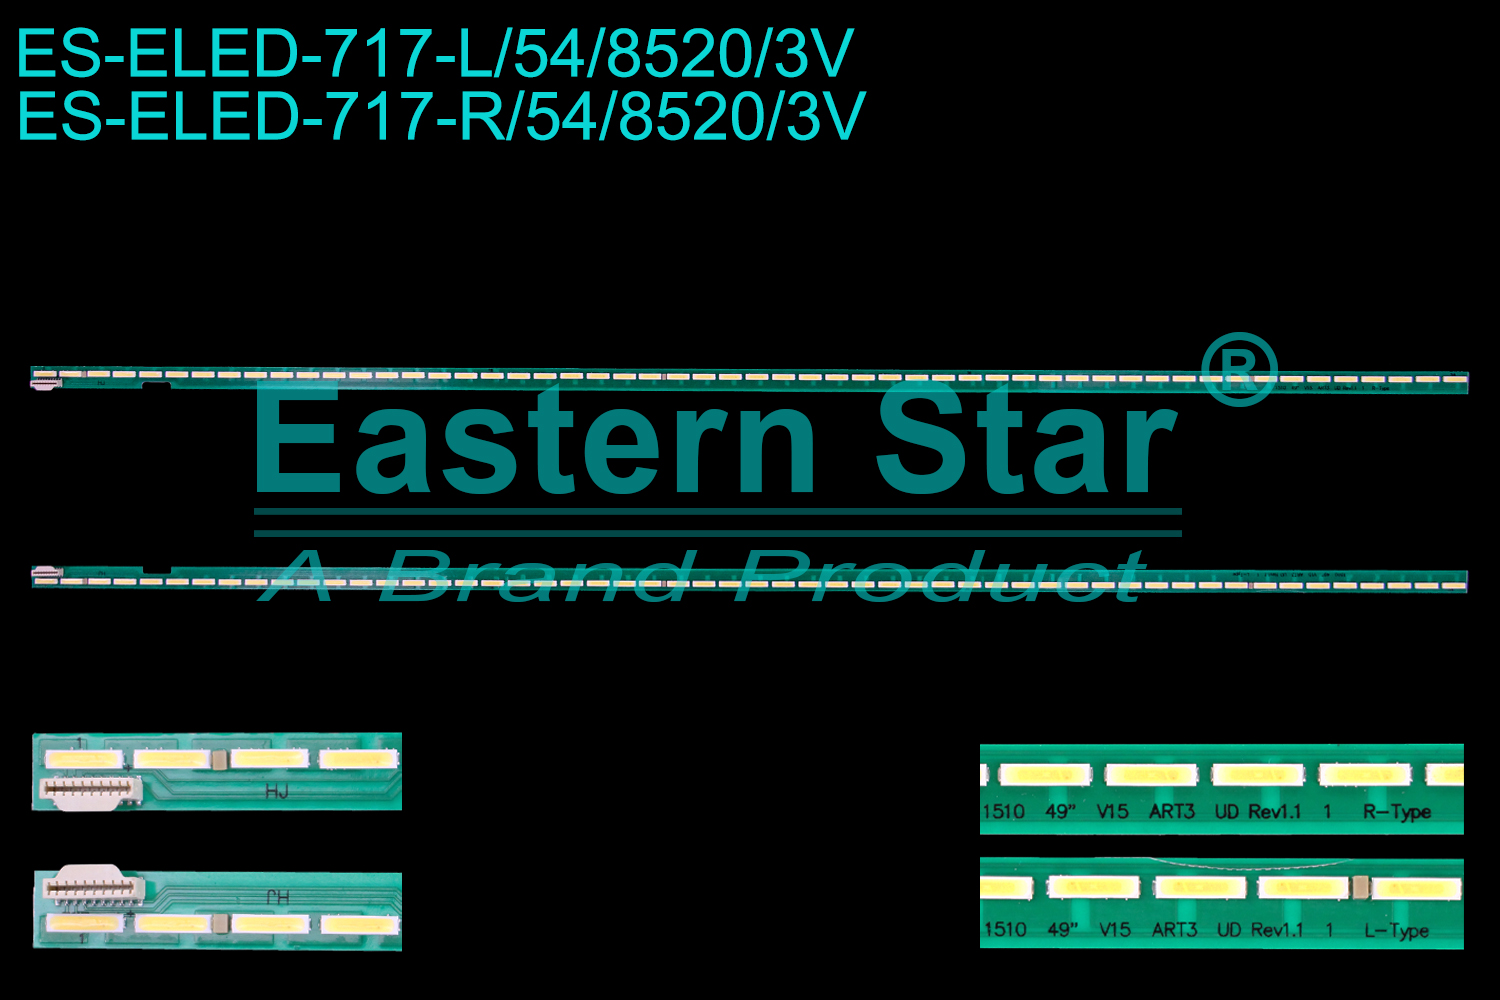 ES-ELED-717 ELED/EDGE TV backlight use for 49'' Lg 49UF6700-UC L: 1510 49" V15 ART3 UD REV1.1 1 L-TYPE  R: 1510 49" V15 ART3 UD REV1.1 1 R-TYPE 6922L-0151A 6091L-2830A  LED STRIPS(2)